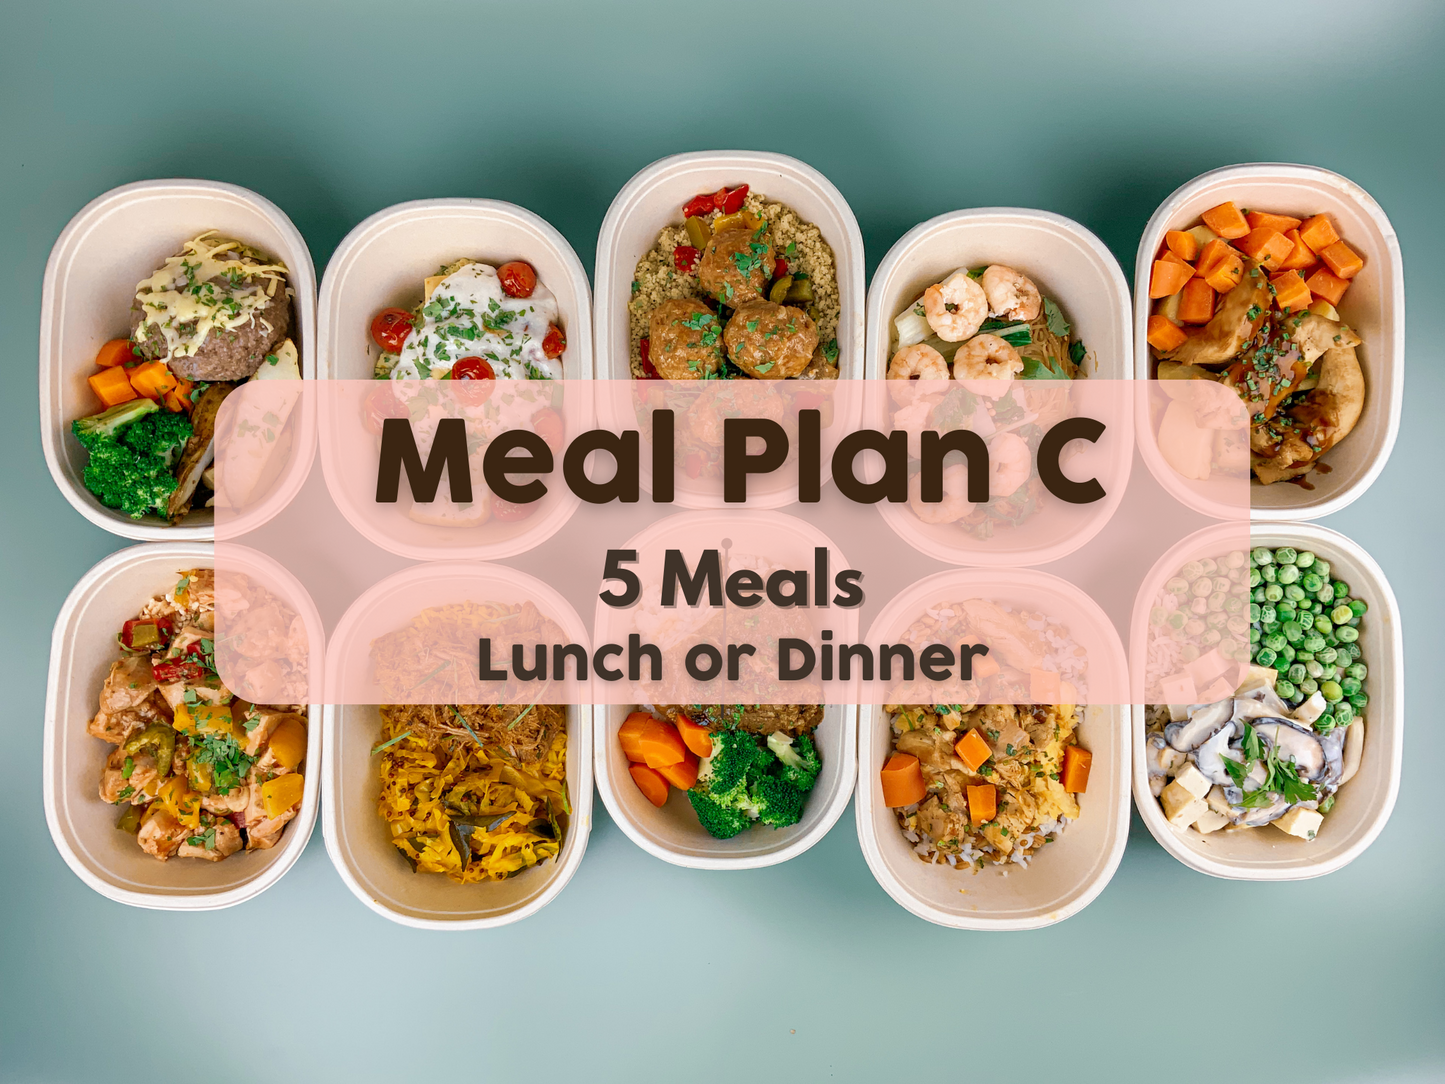 27th November - 1st December Meal Plan C